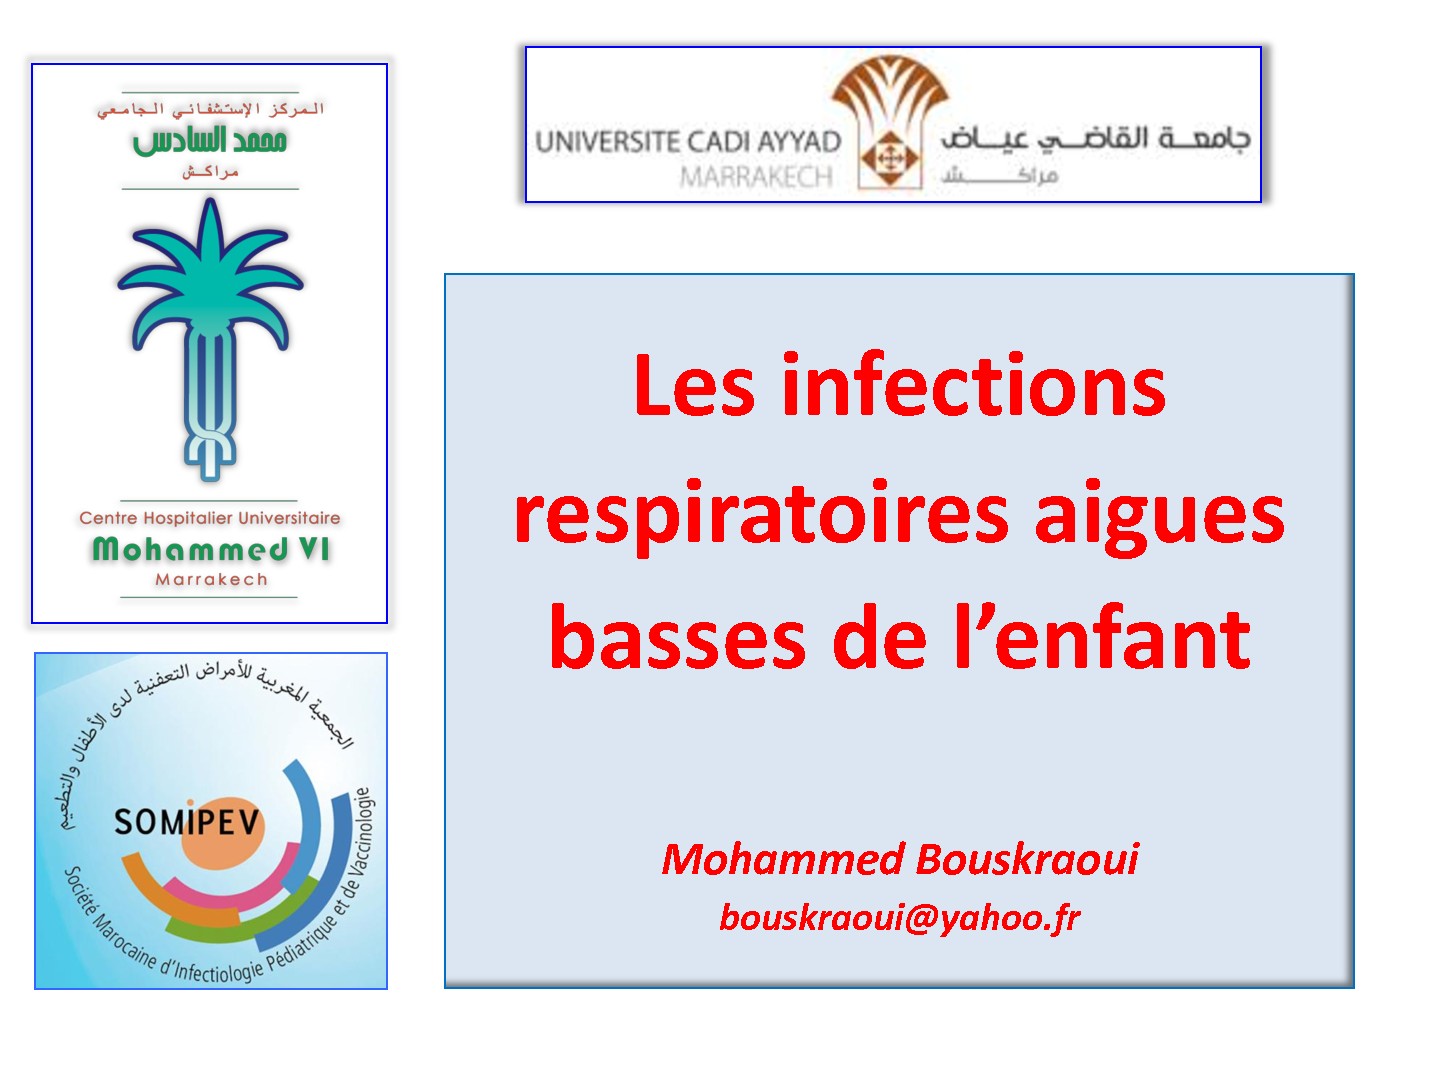 Les infections respiratoires aigues basses de l'enfant. Mohammed Bouskraoui